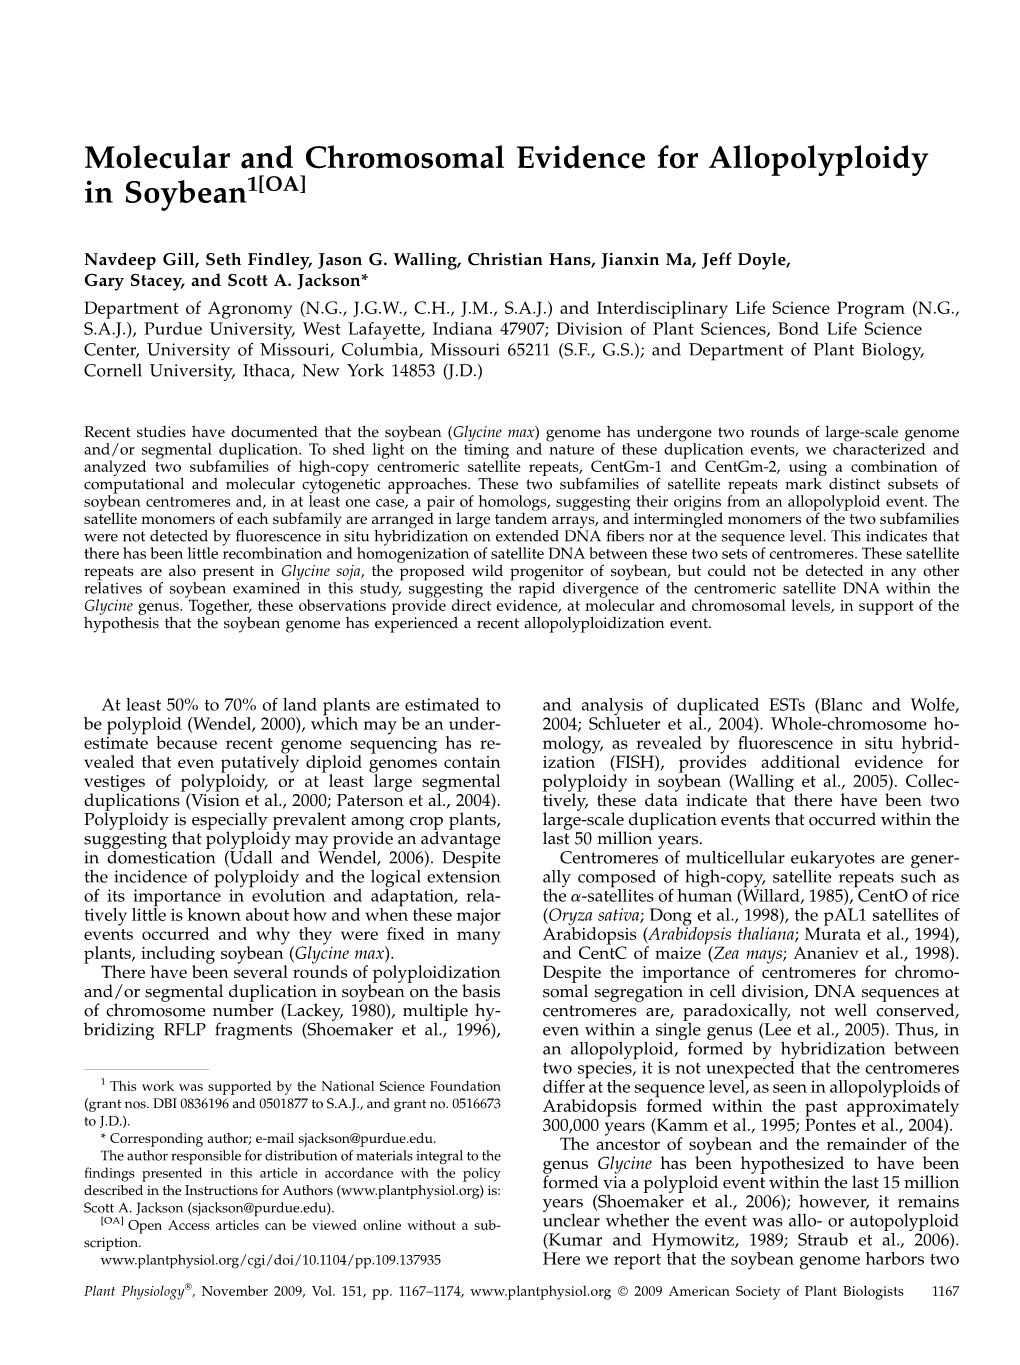 Molecular and Chromosomal Evidence for Allopolyploidy in Soybean1[OA]